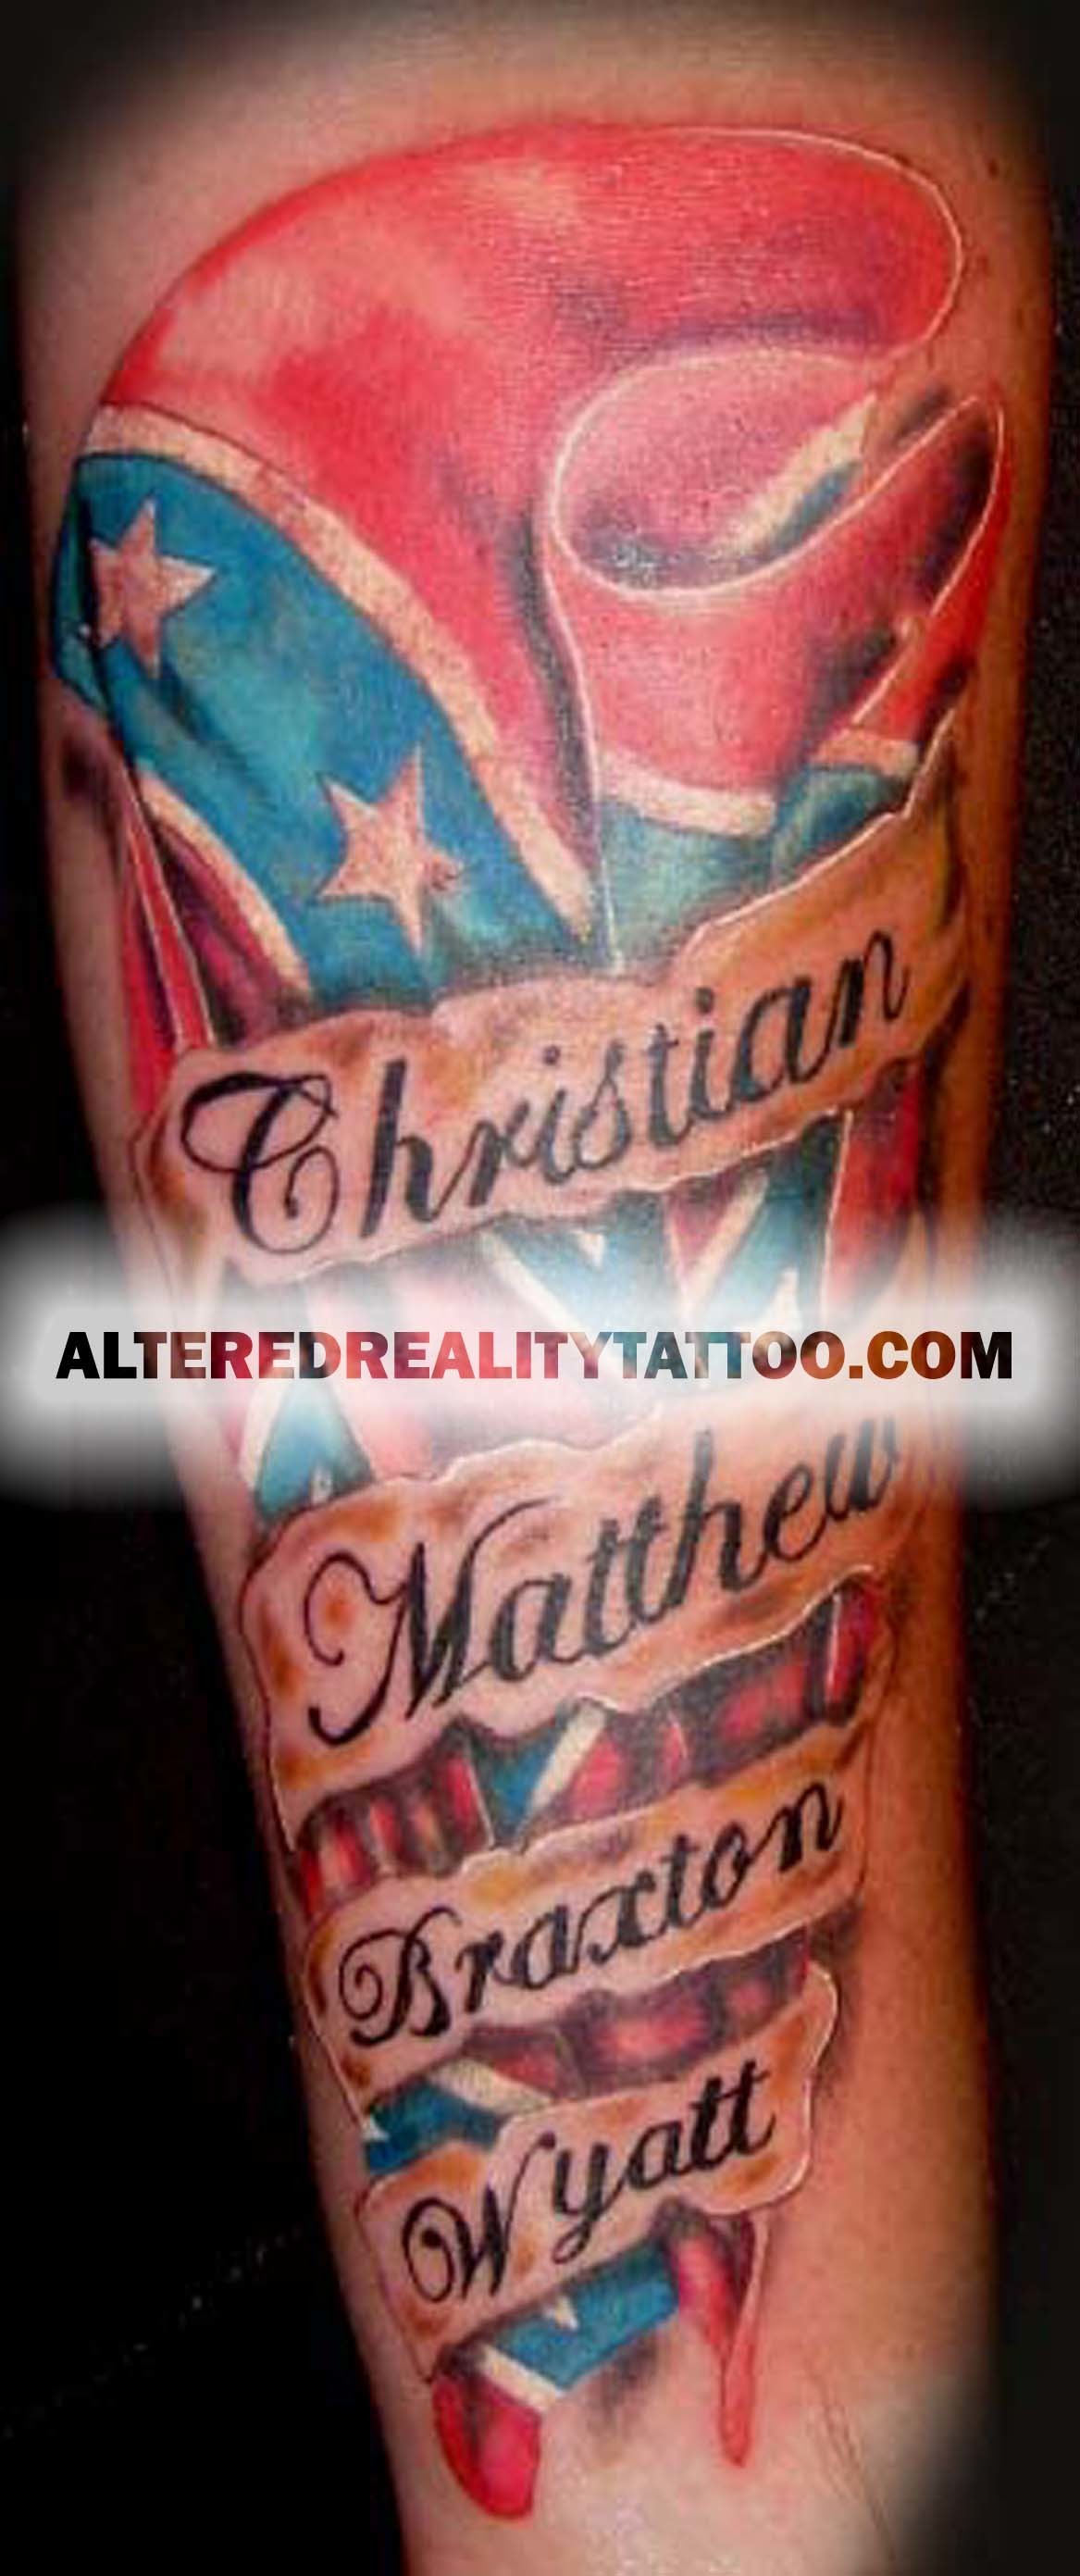 AR Confederate Flag Tattoo Picture